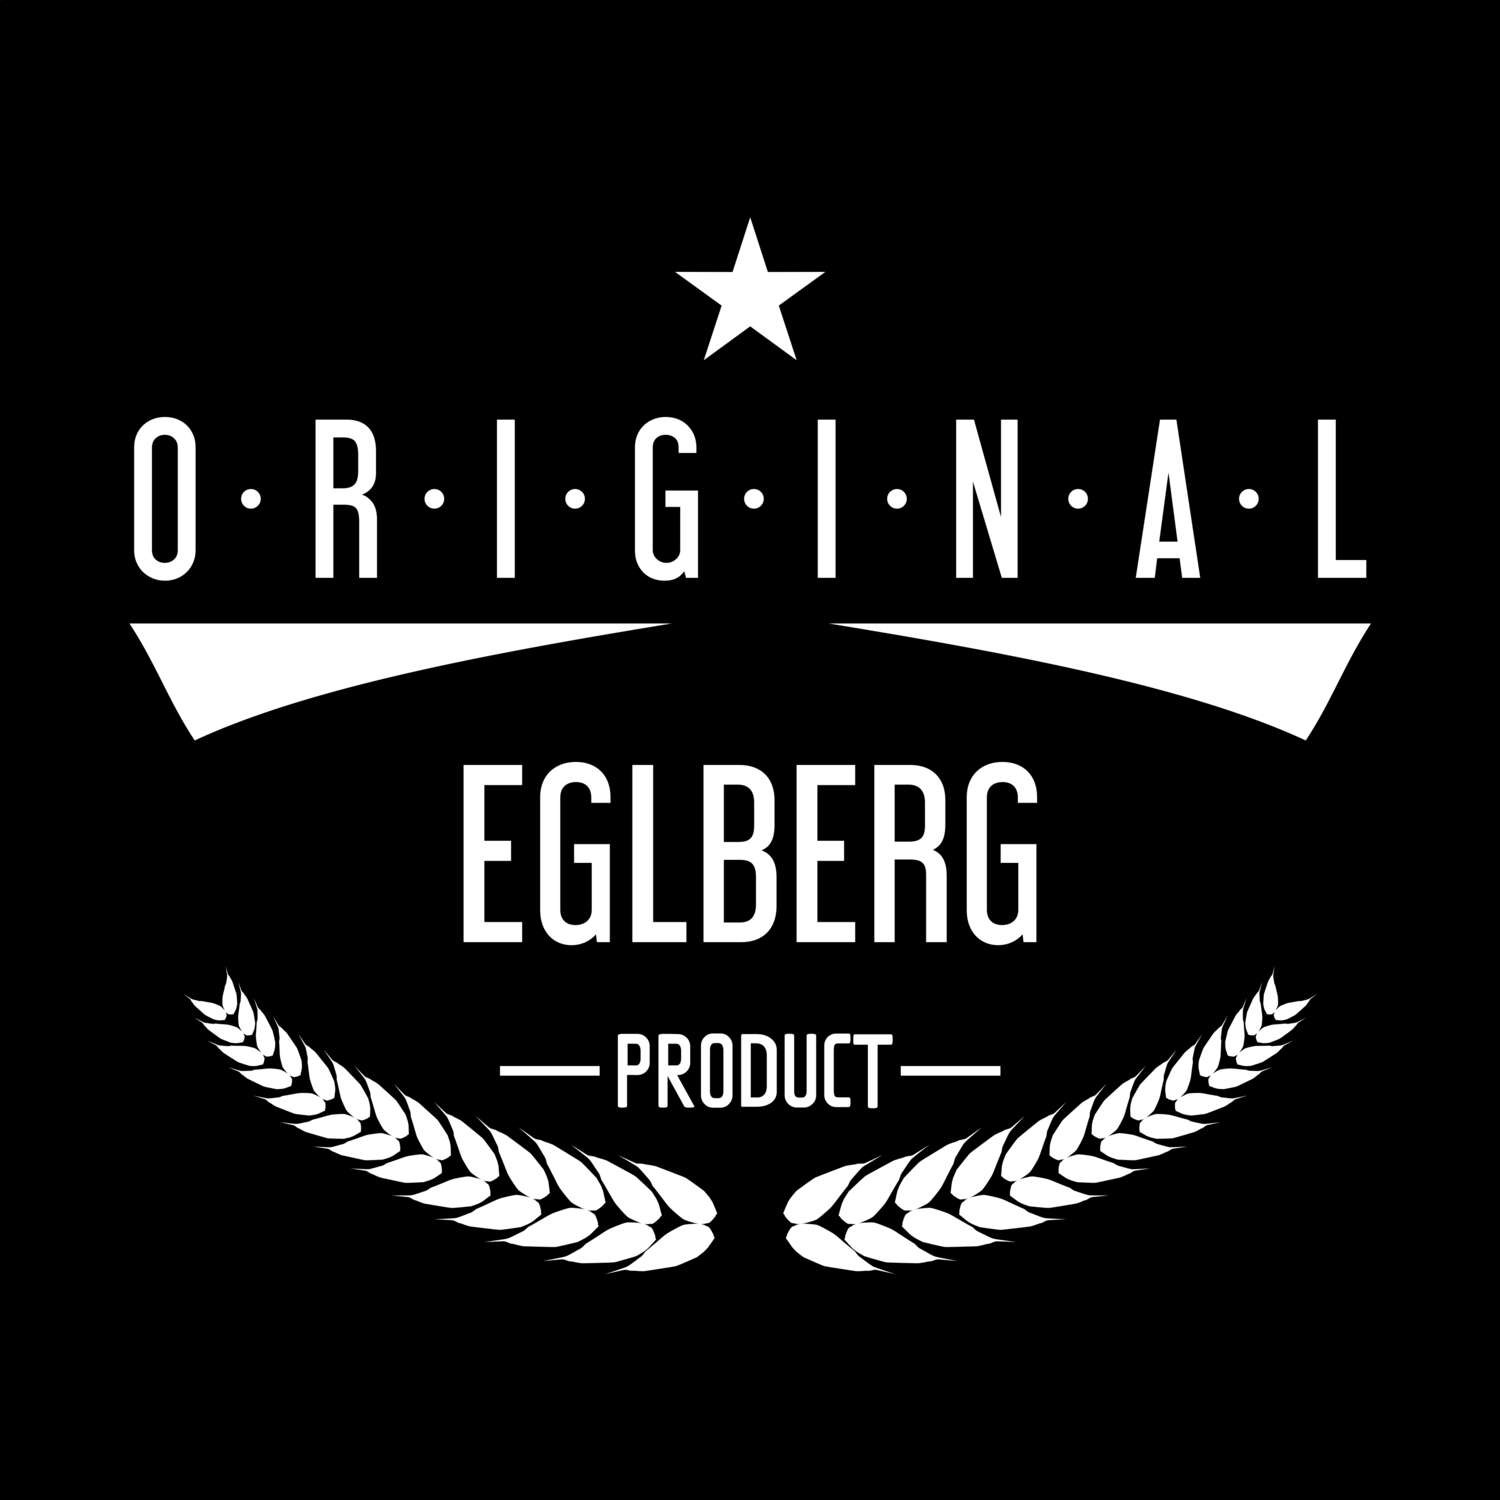 Eglberg T-Shirt »Original Product«